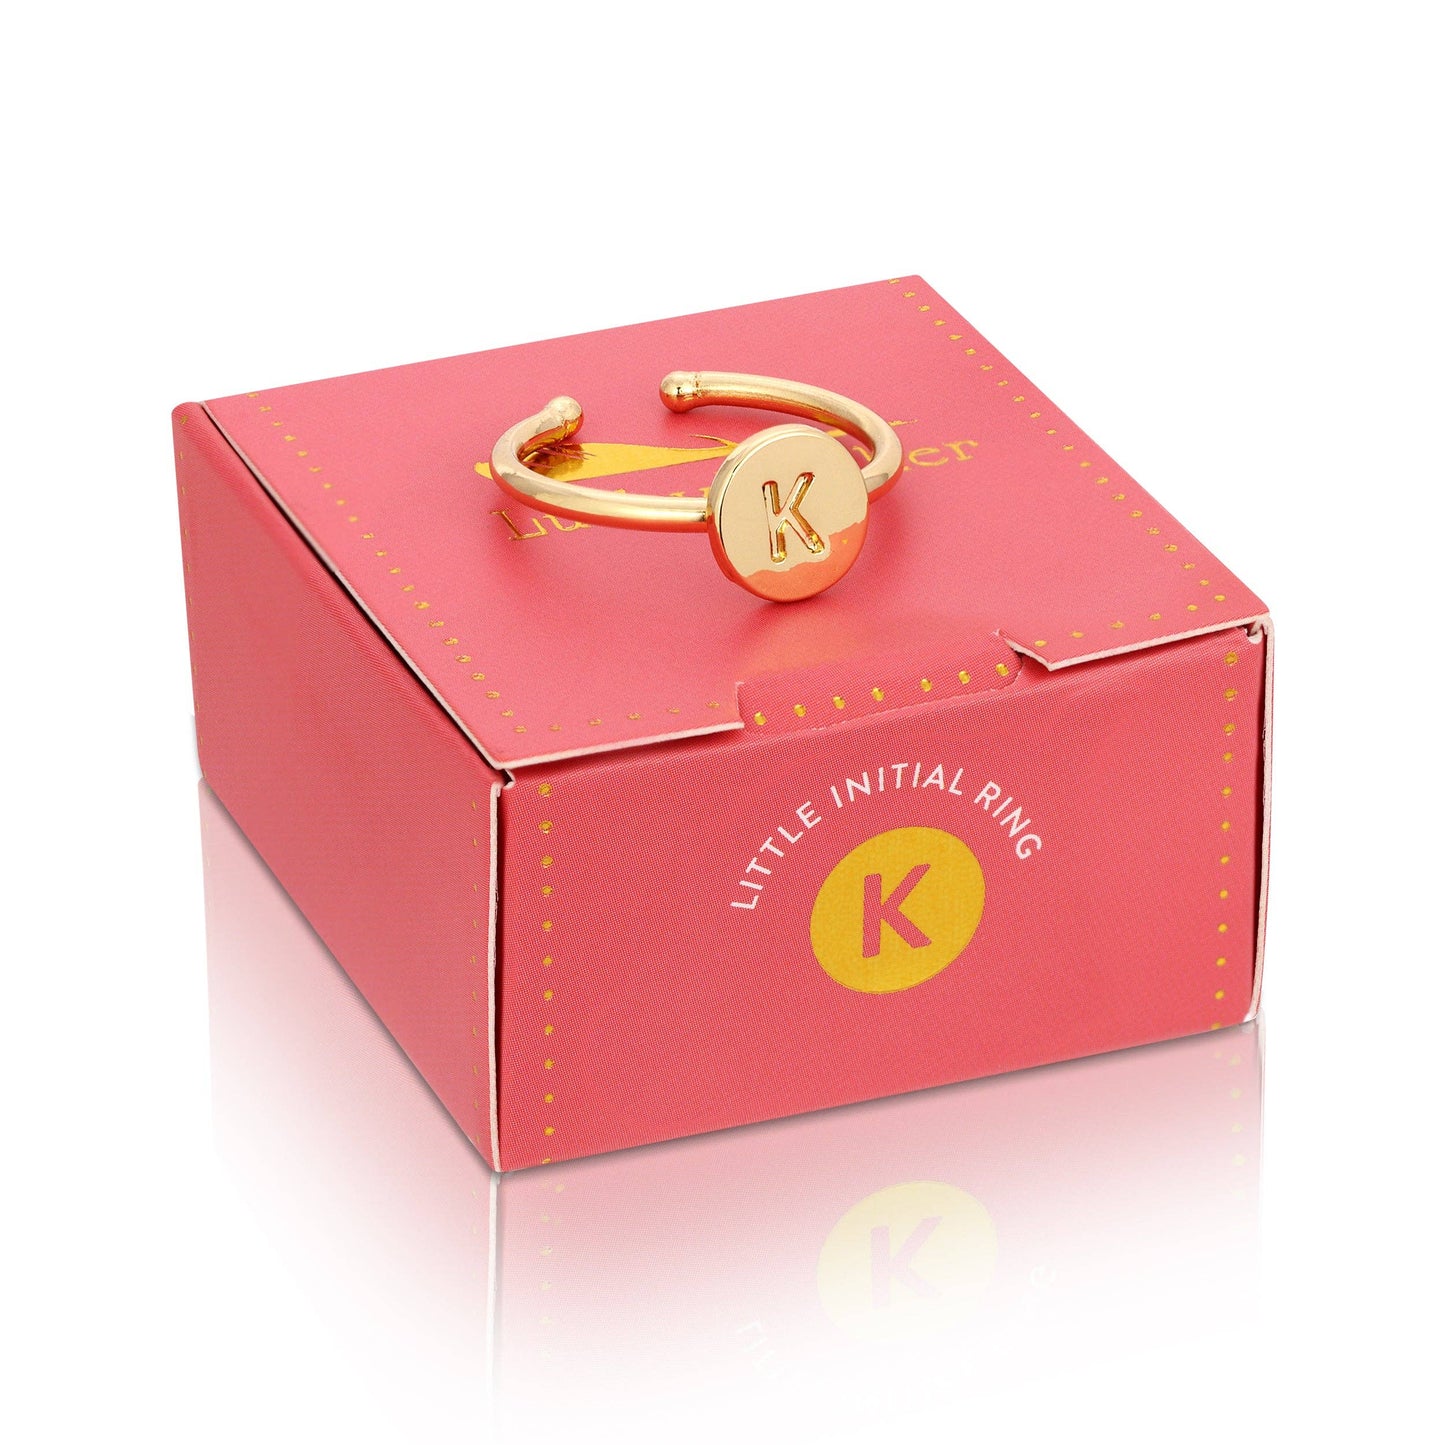 Initial Ring Ring - small box - K